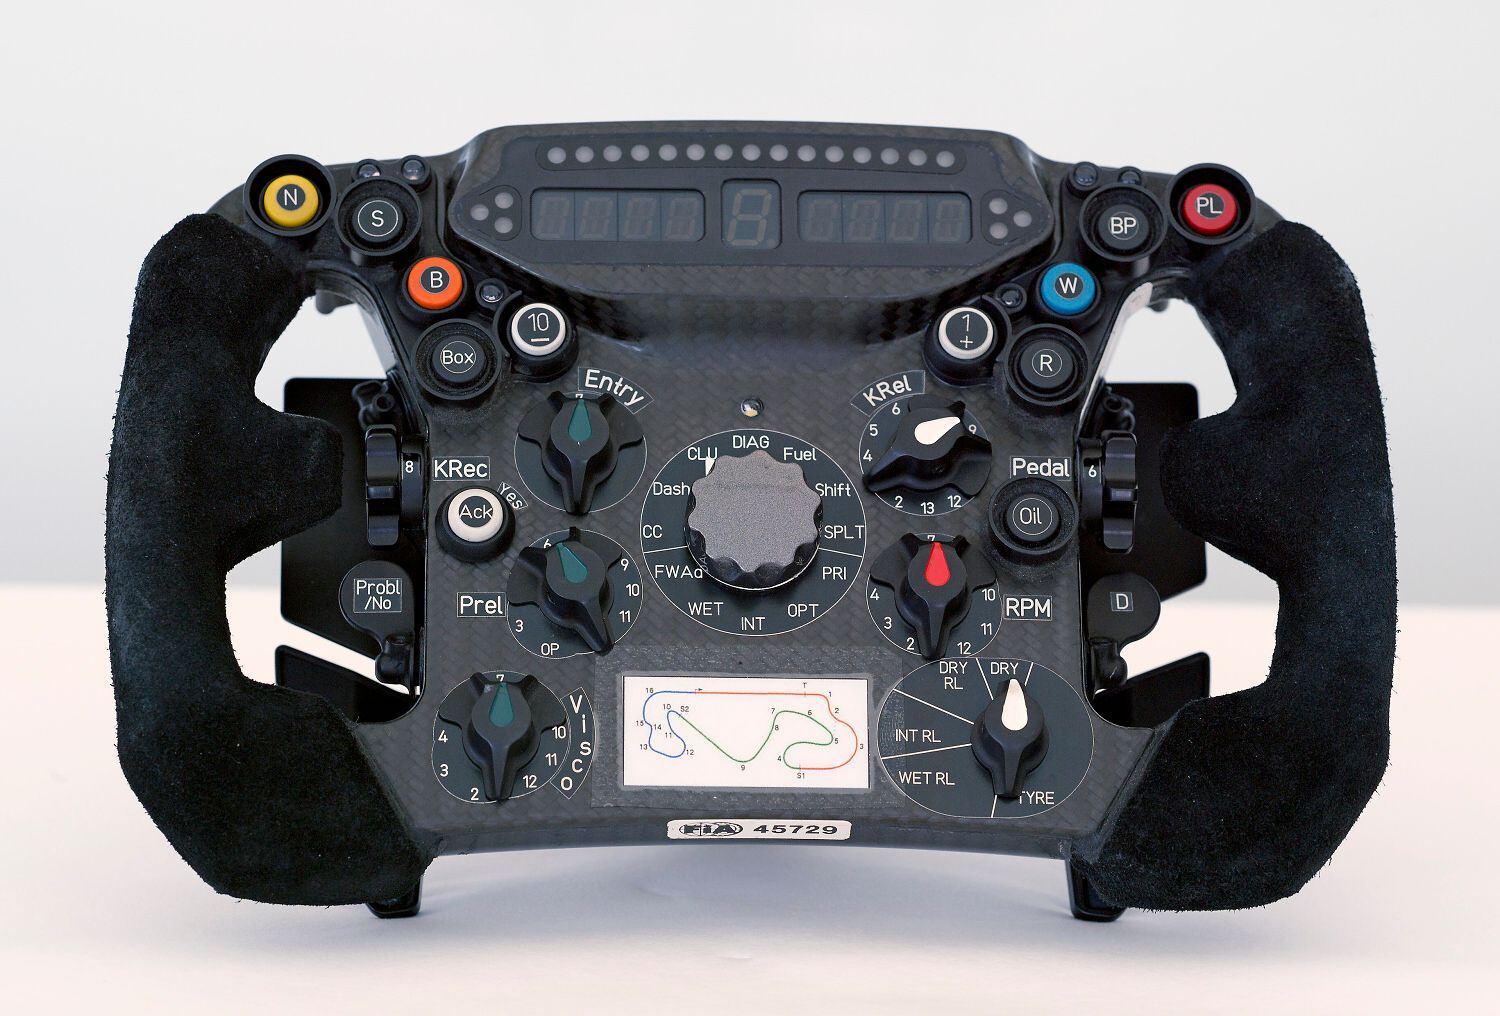 F1 - volant: Sauber